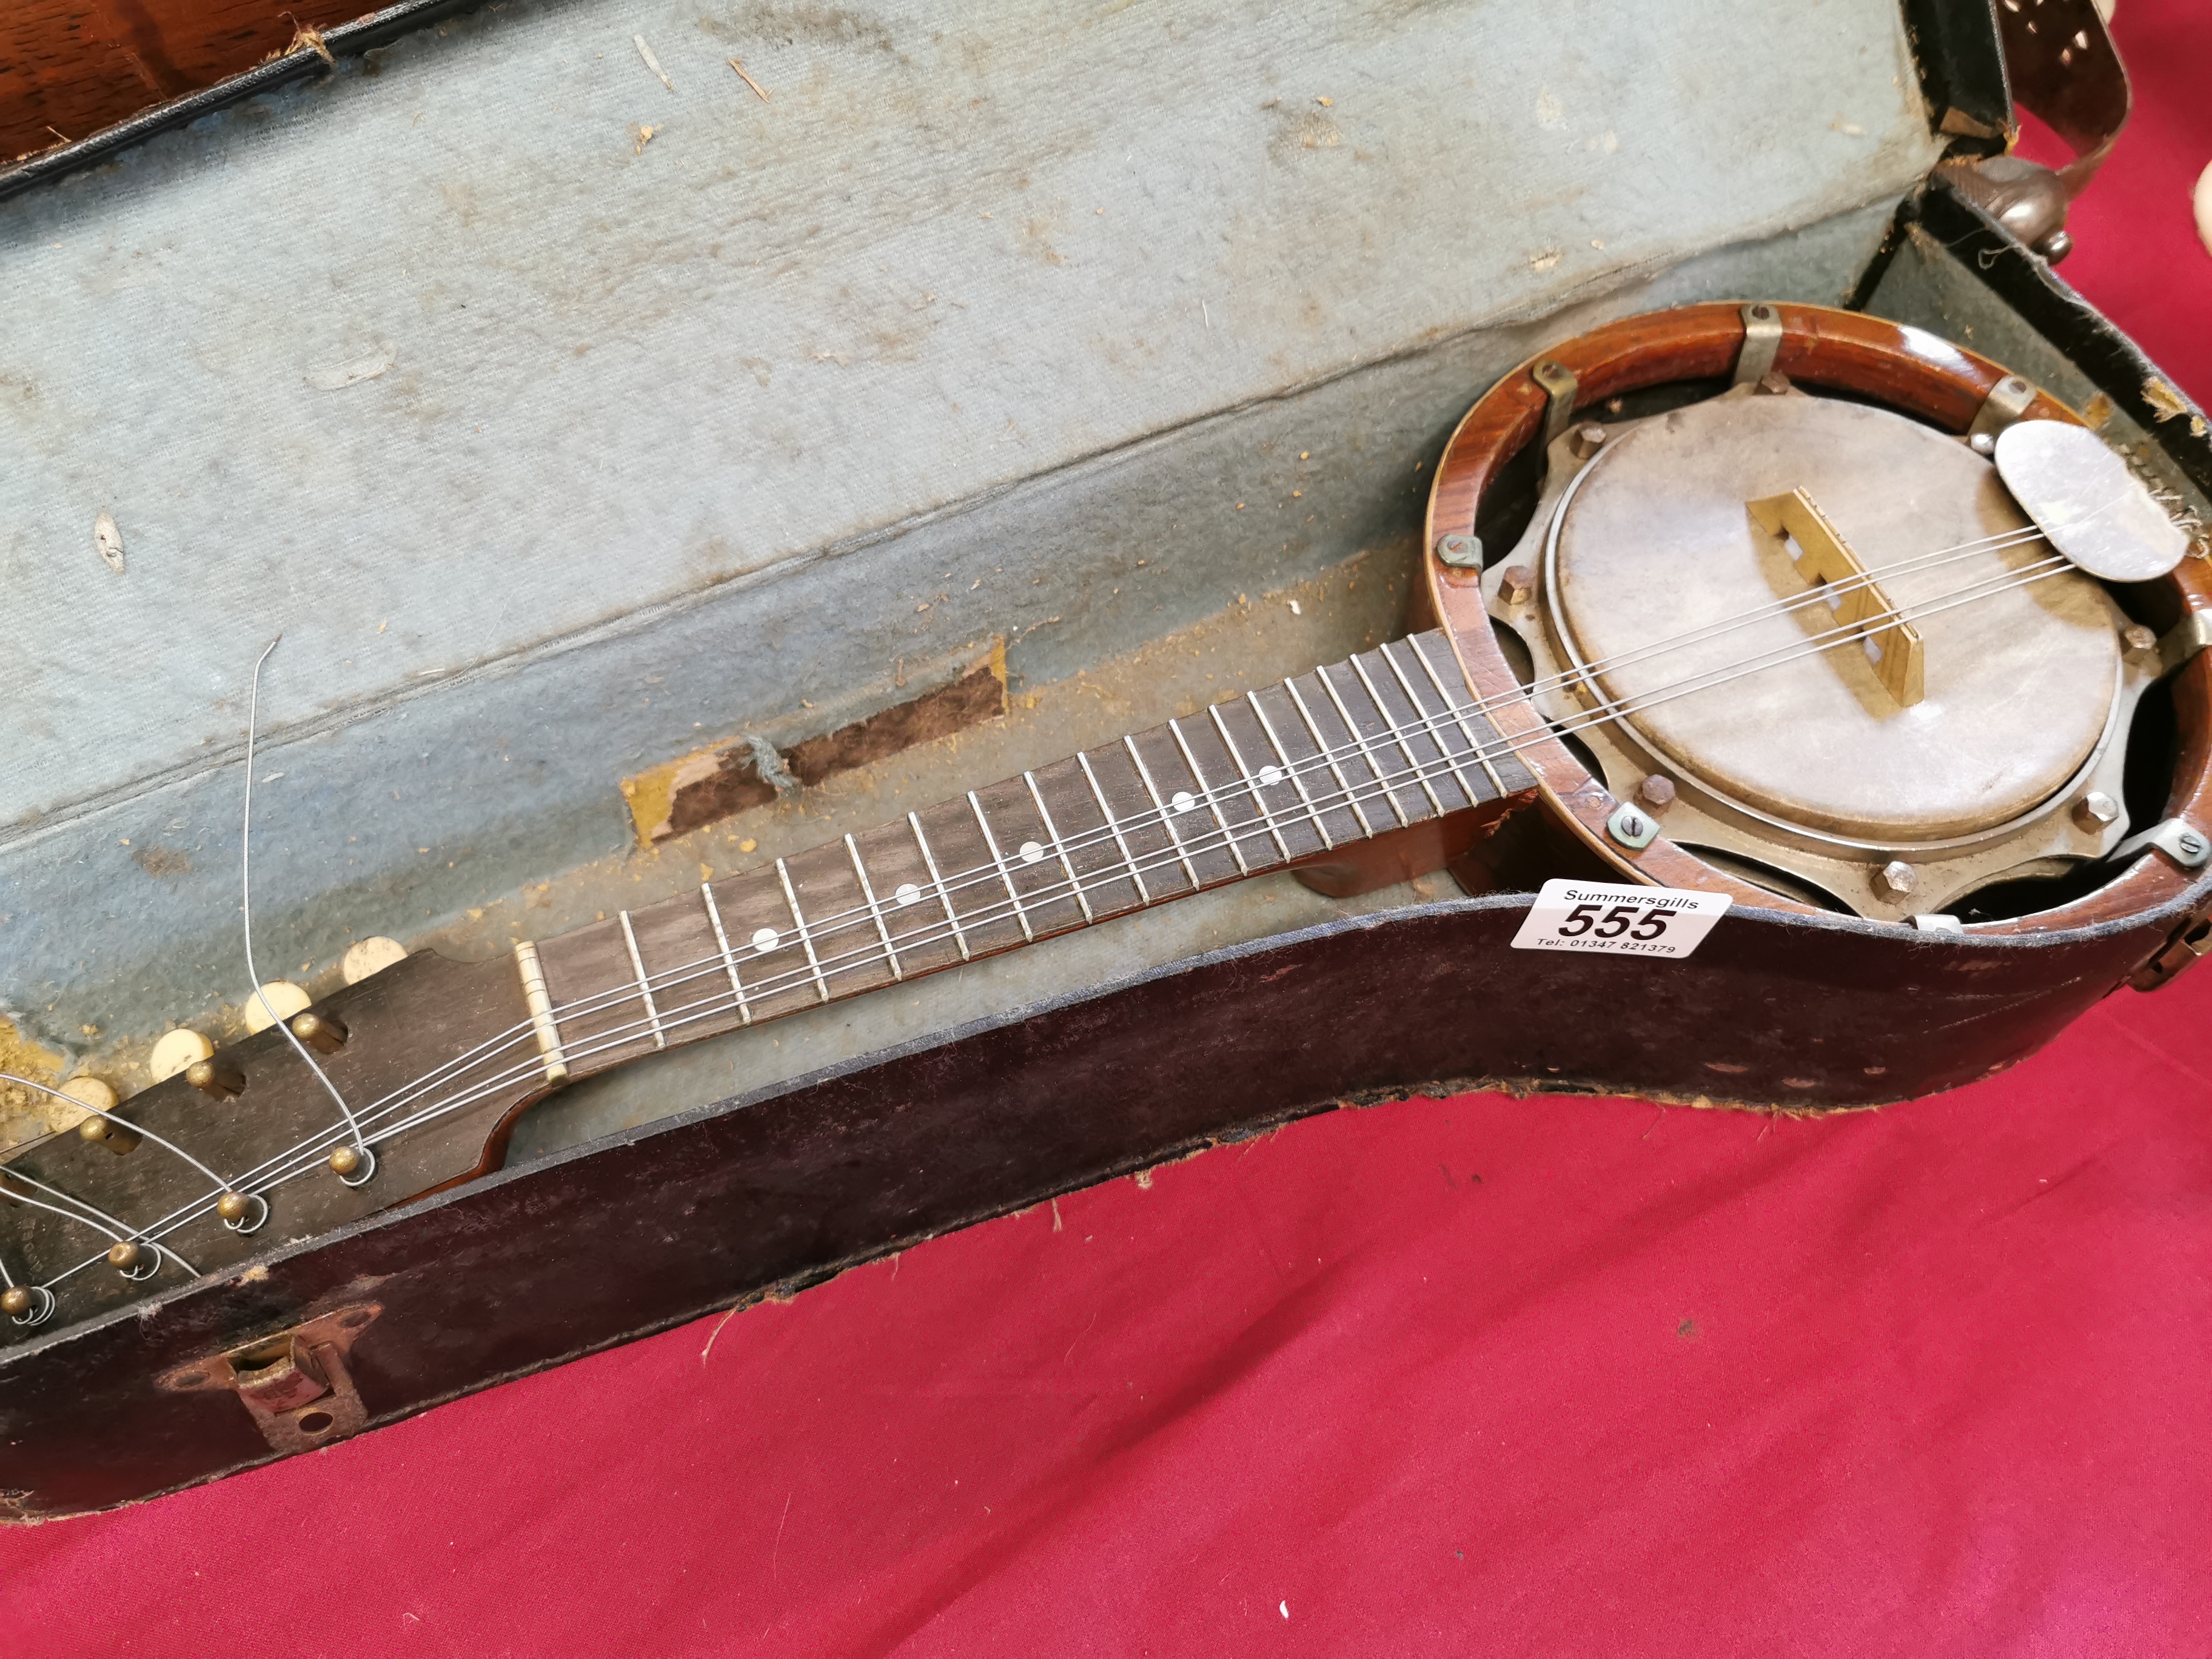 Antique mandolin by WIndsor in original case